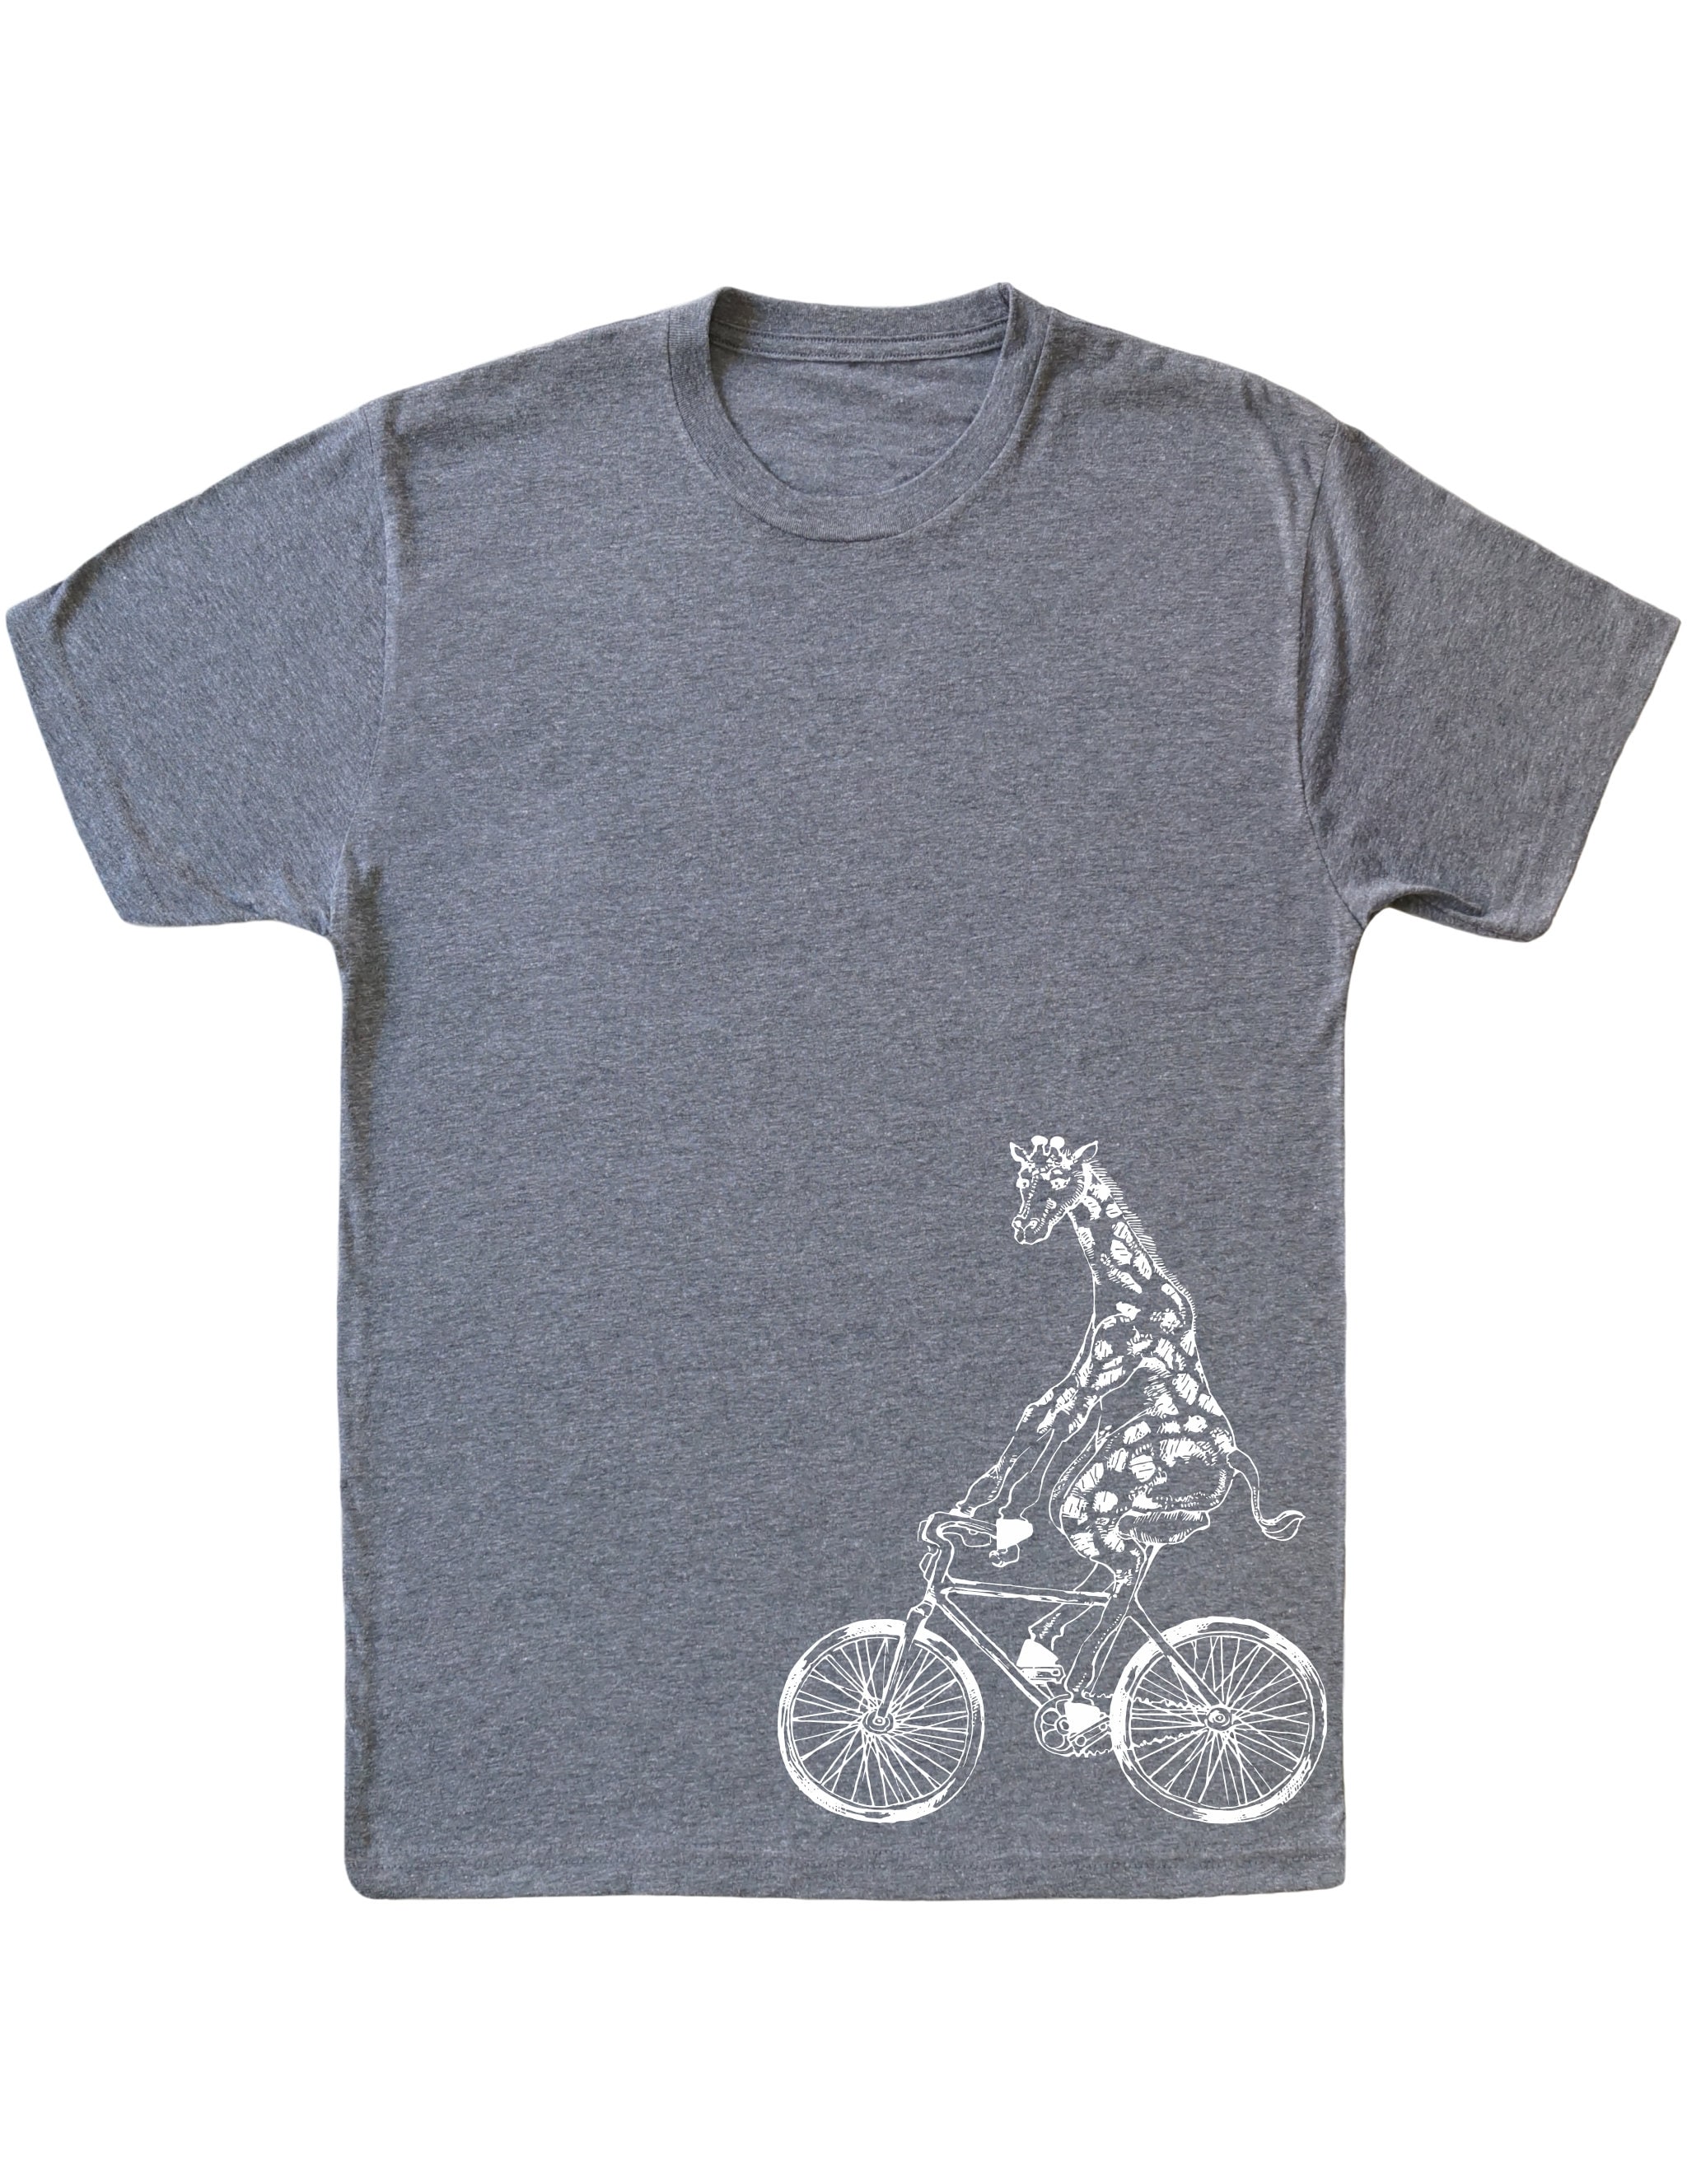 Giraffe On A Bicycle Men's Tri-Blend T-Shirt Gift For Him, Boyfriend Birthday, Cycling Shirt Husband Gift, Gifts Men Seembo